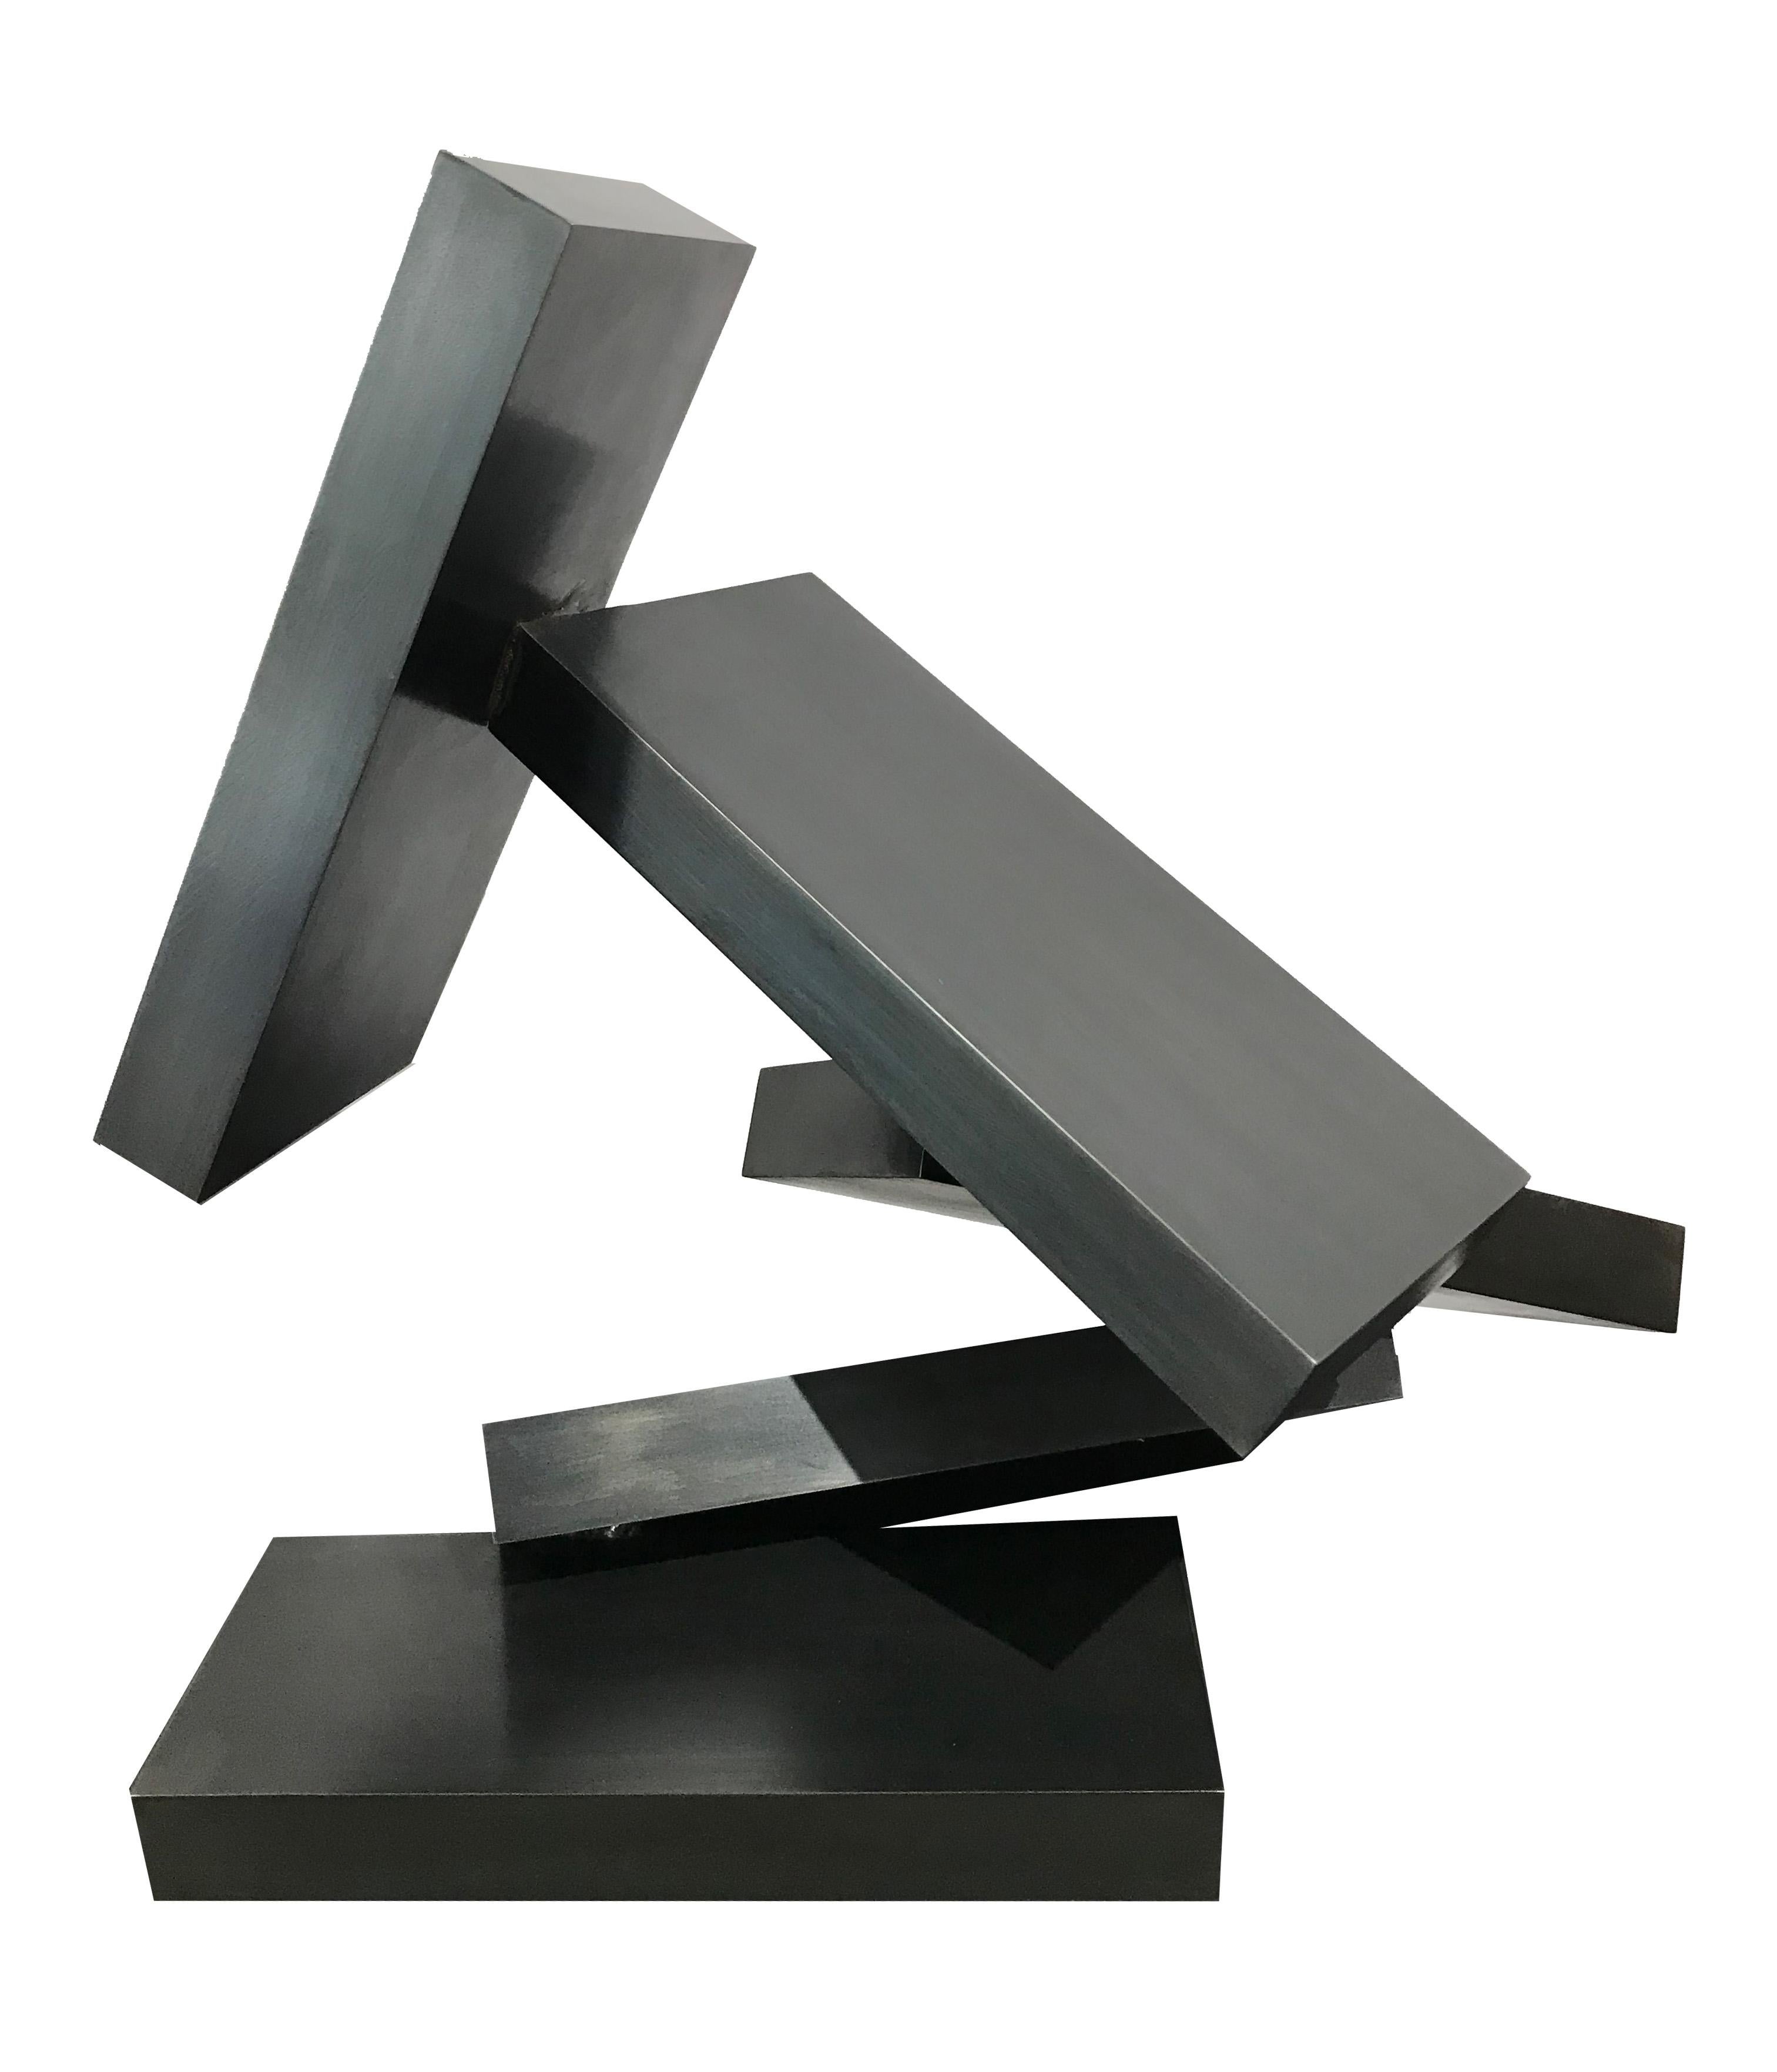 Abstract Sculpture Etienne Viard - 5 Plaques